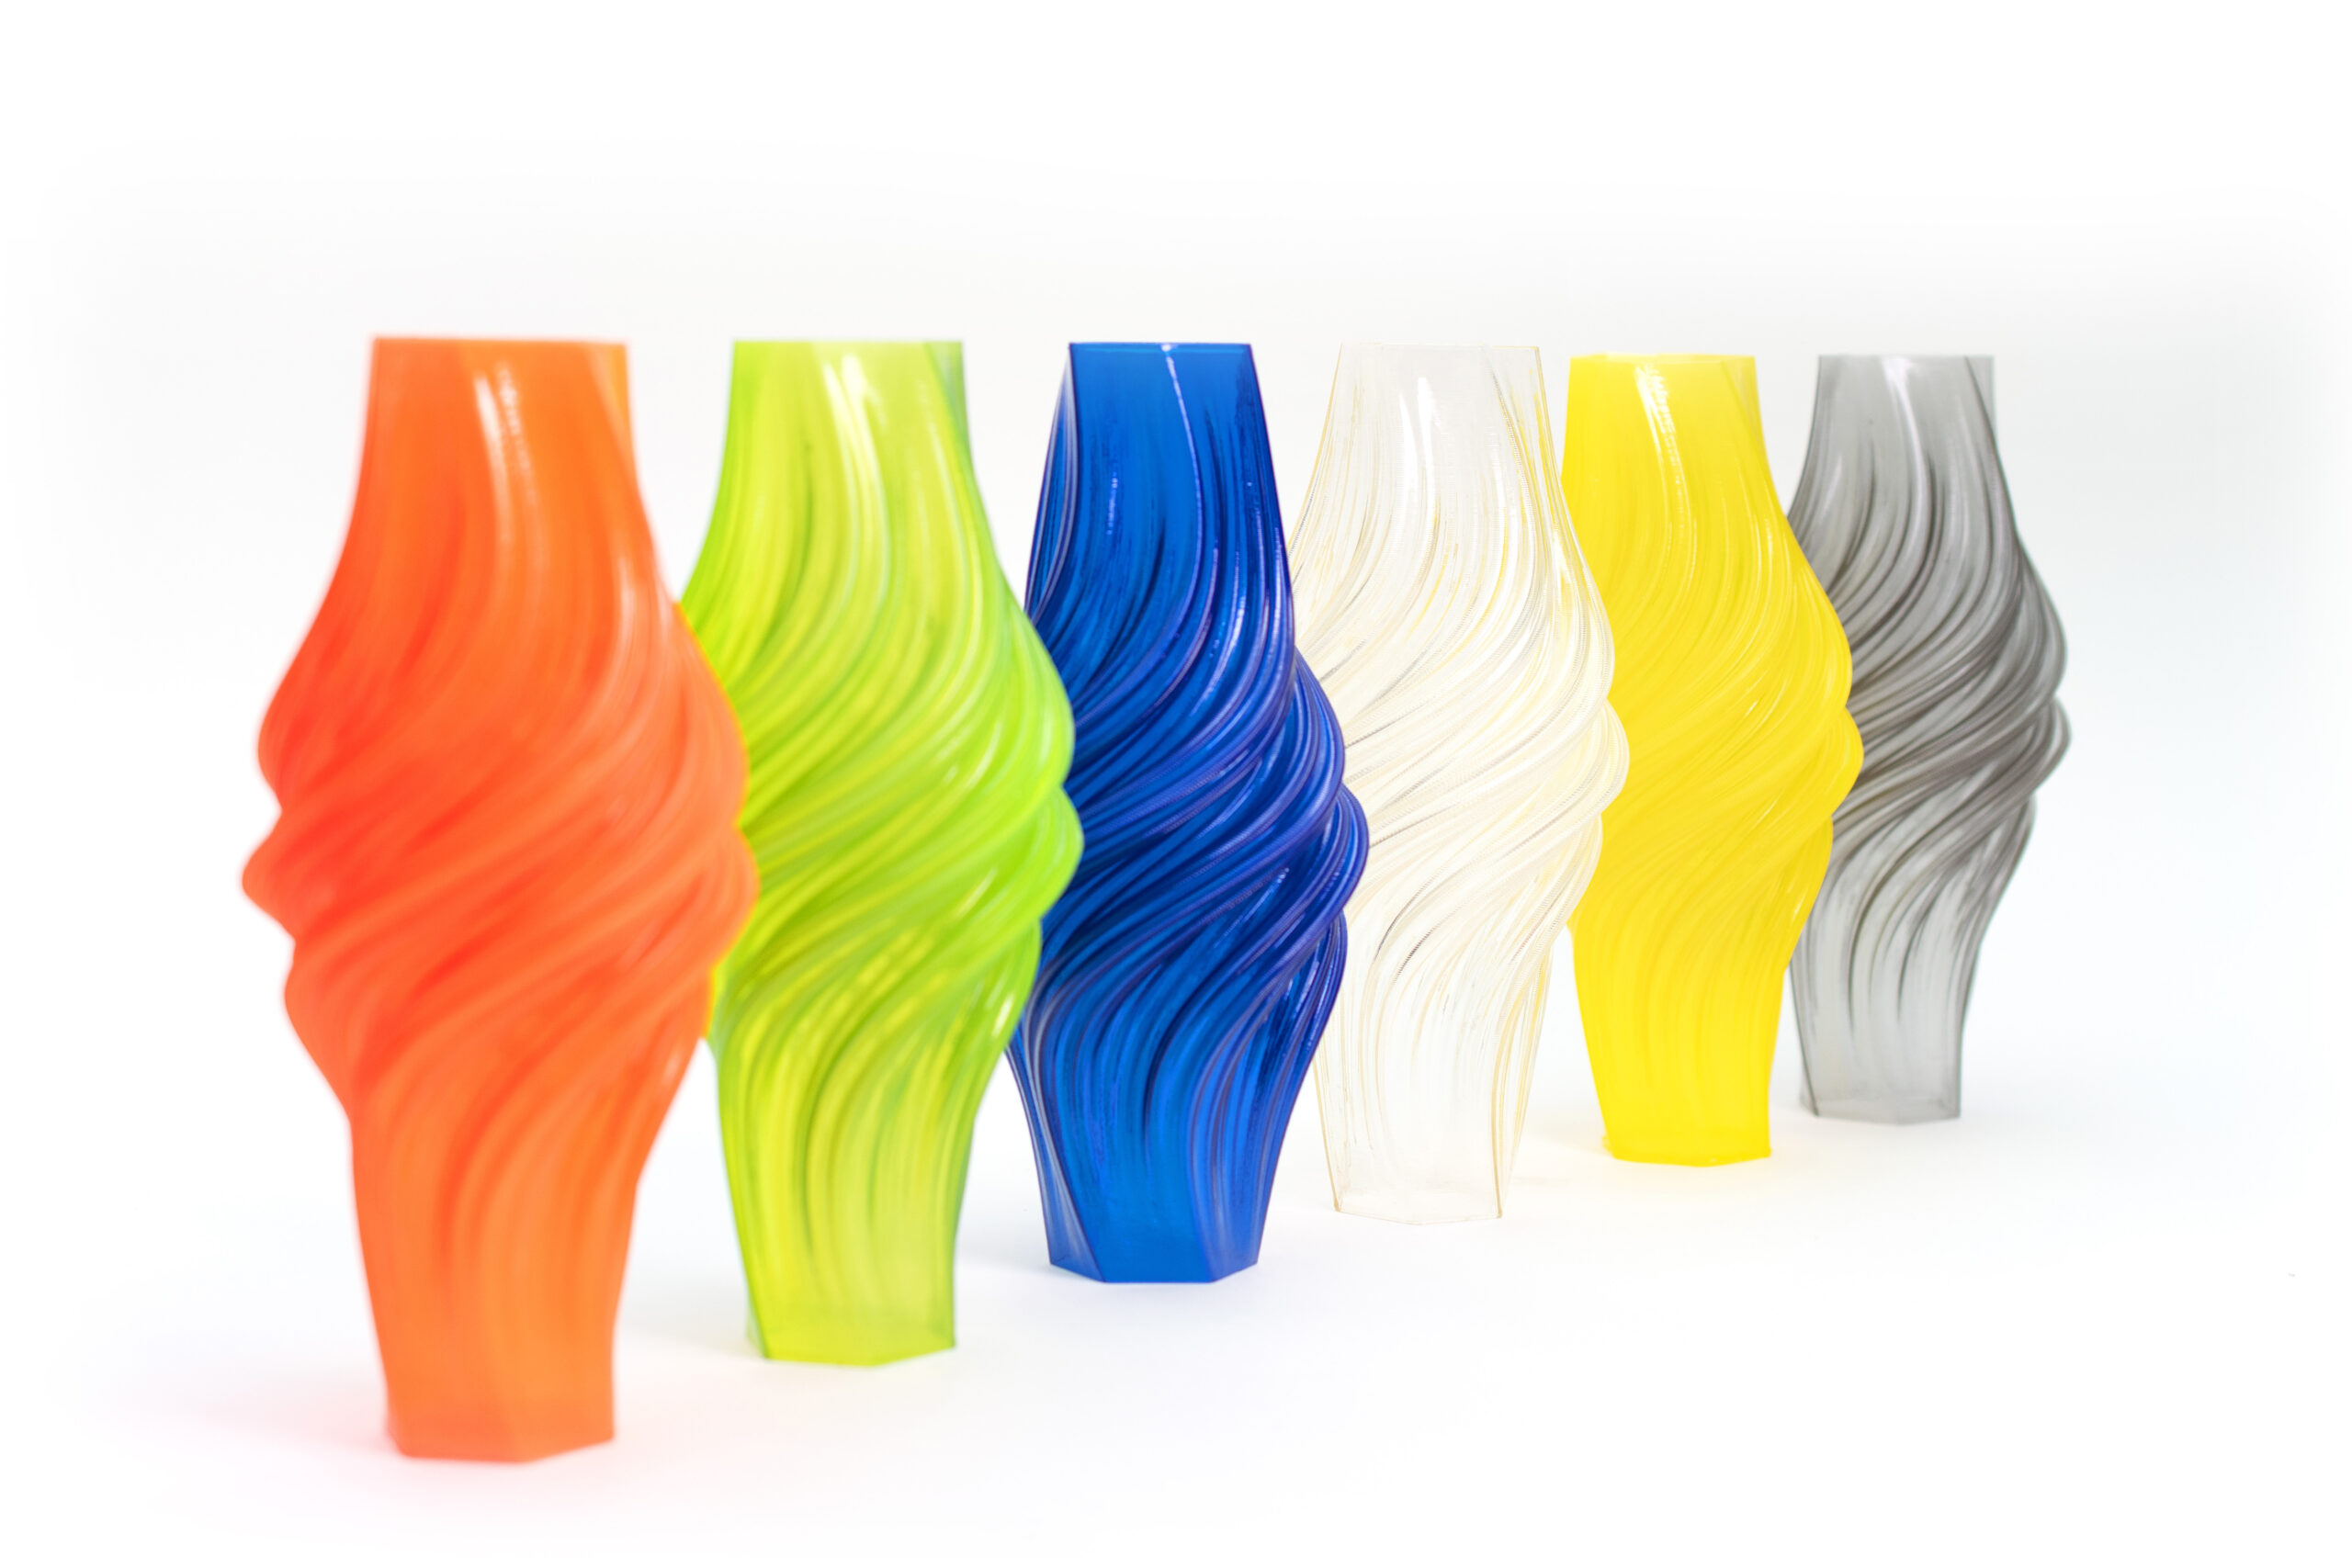 Prusament PVB – our new transparent filament designed for easy